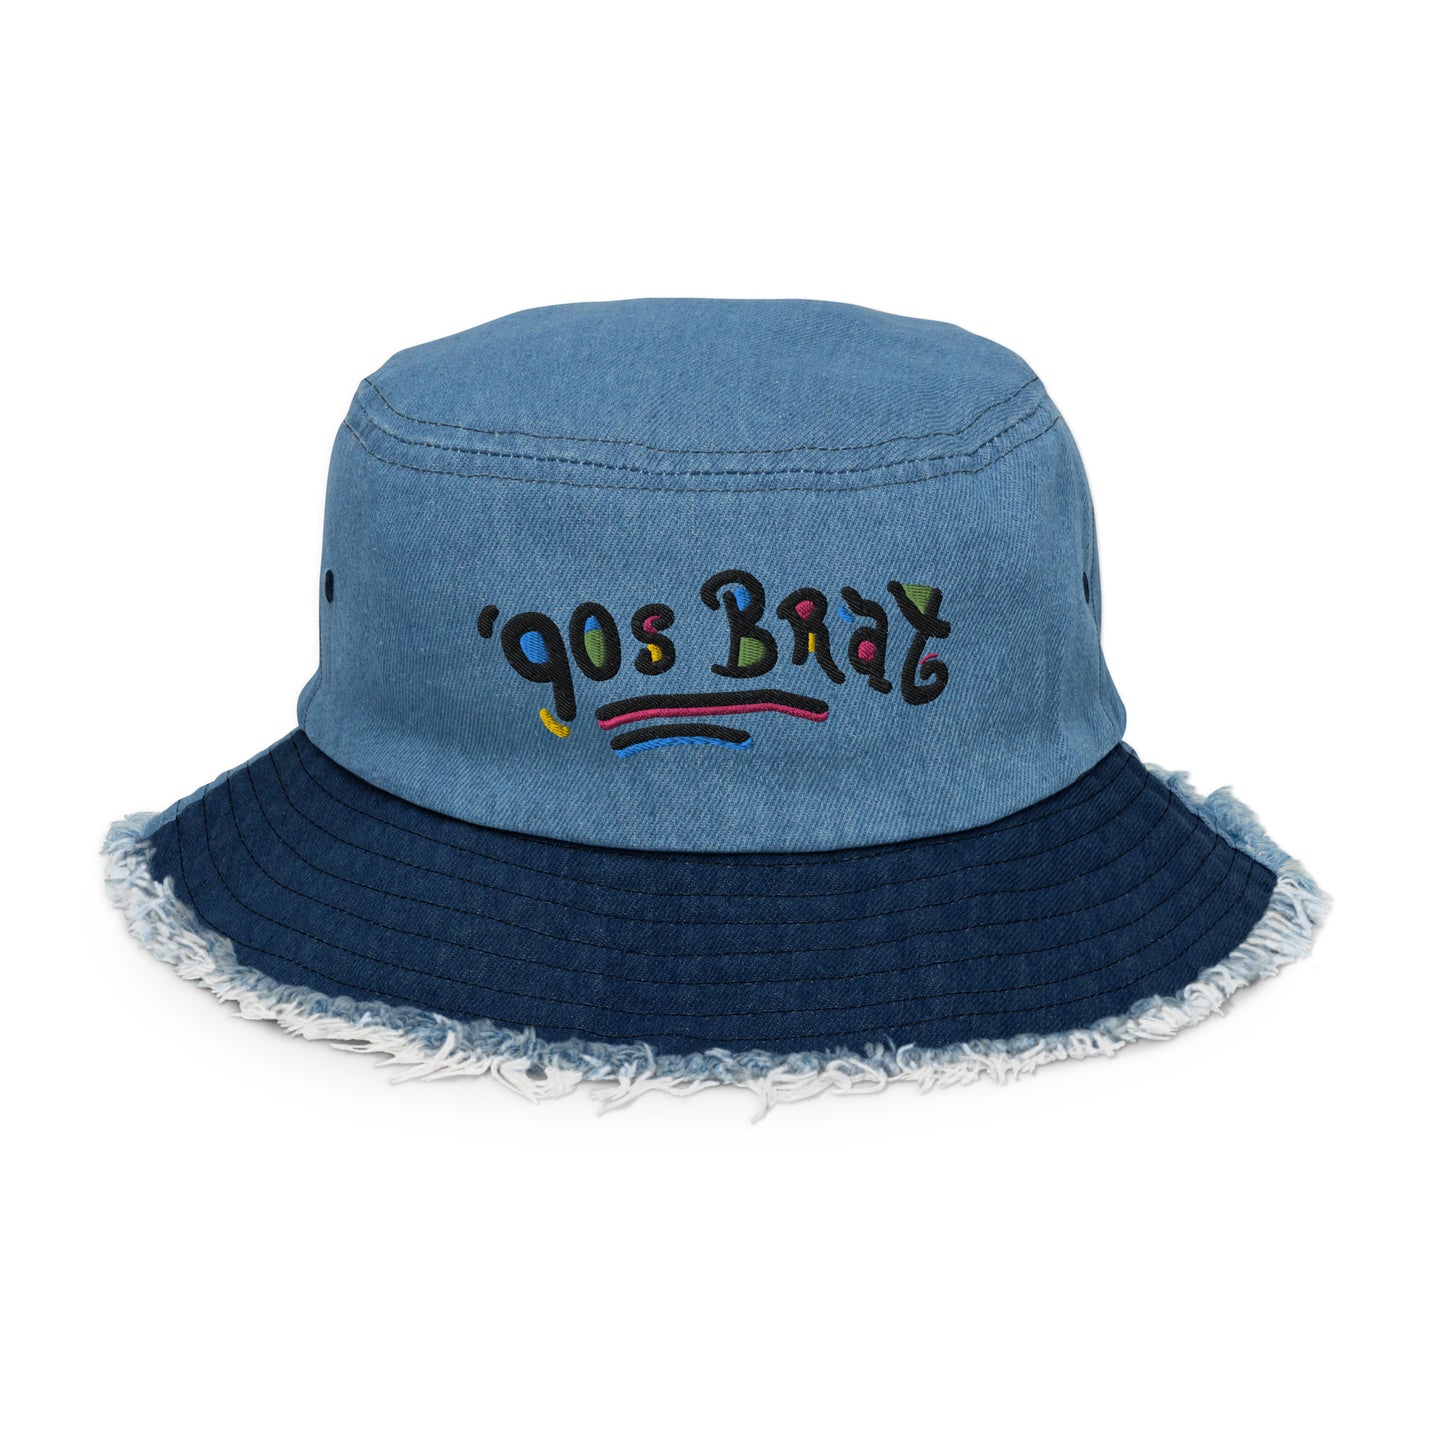 90s Brat distressed denim bucket hat